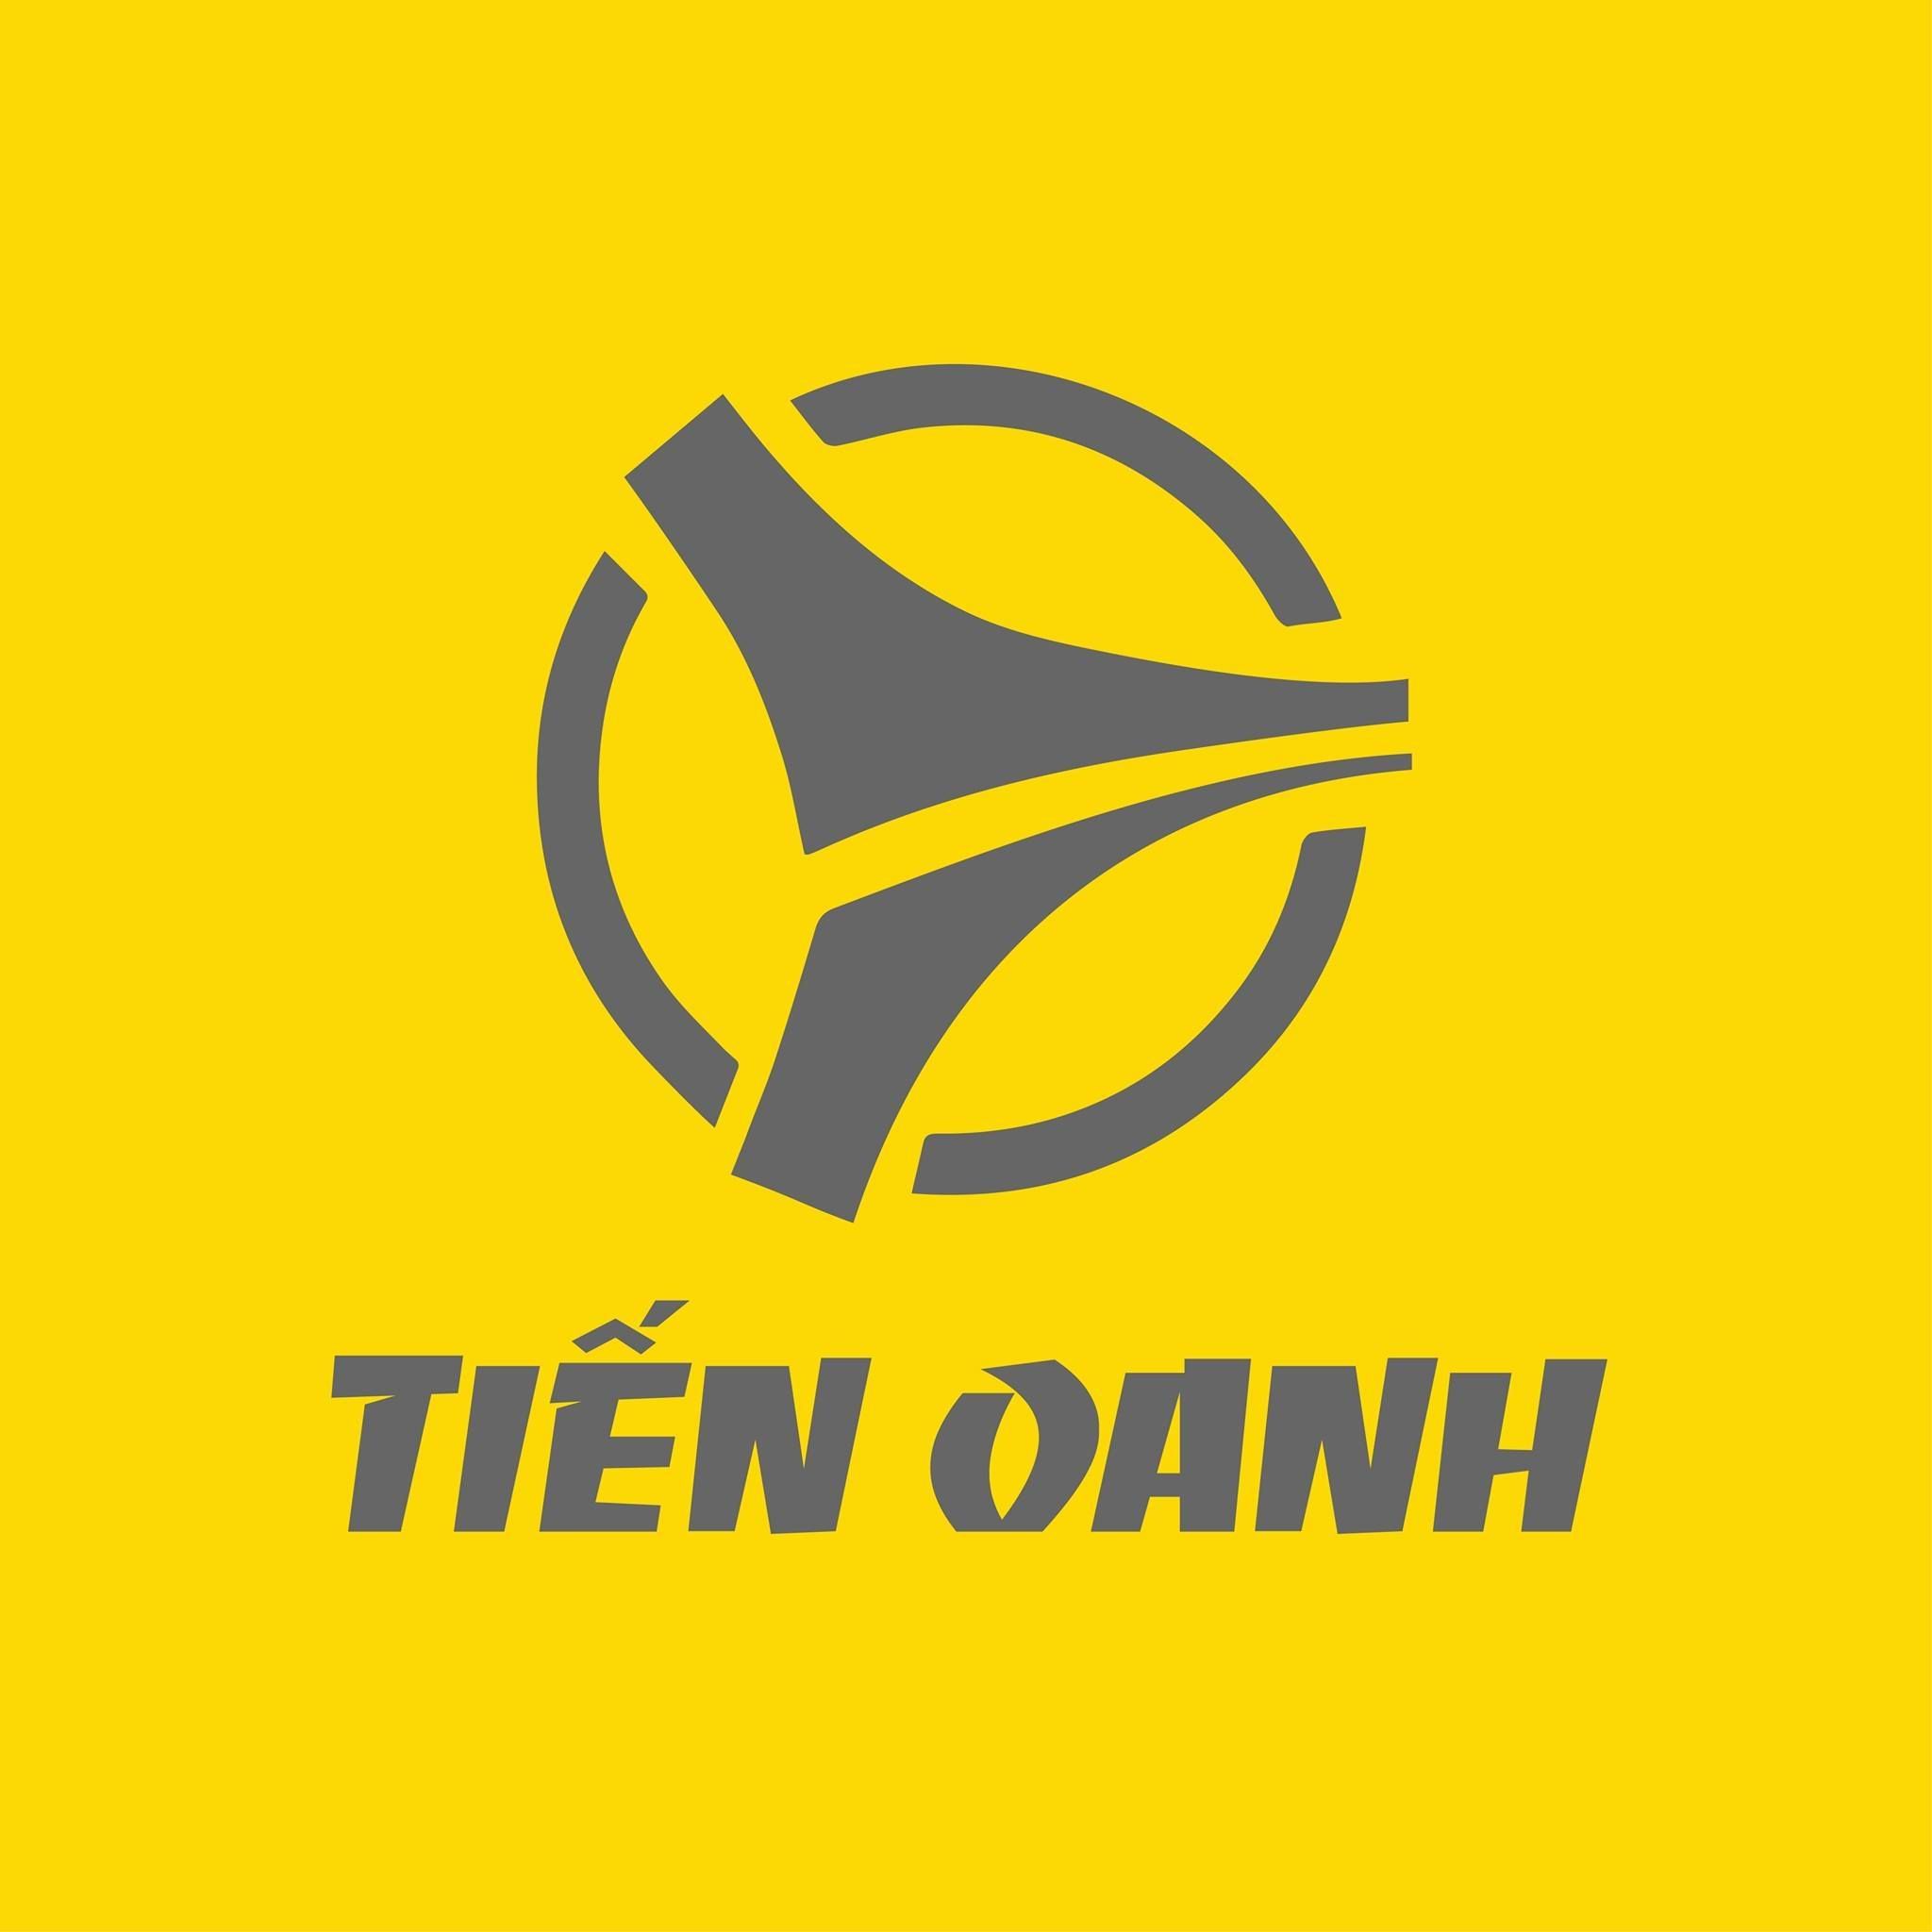 Tien Oanh logo